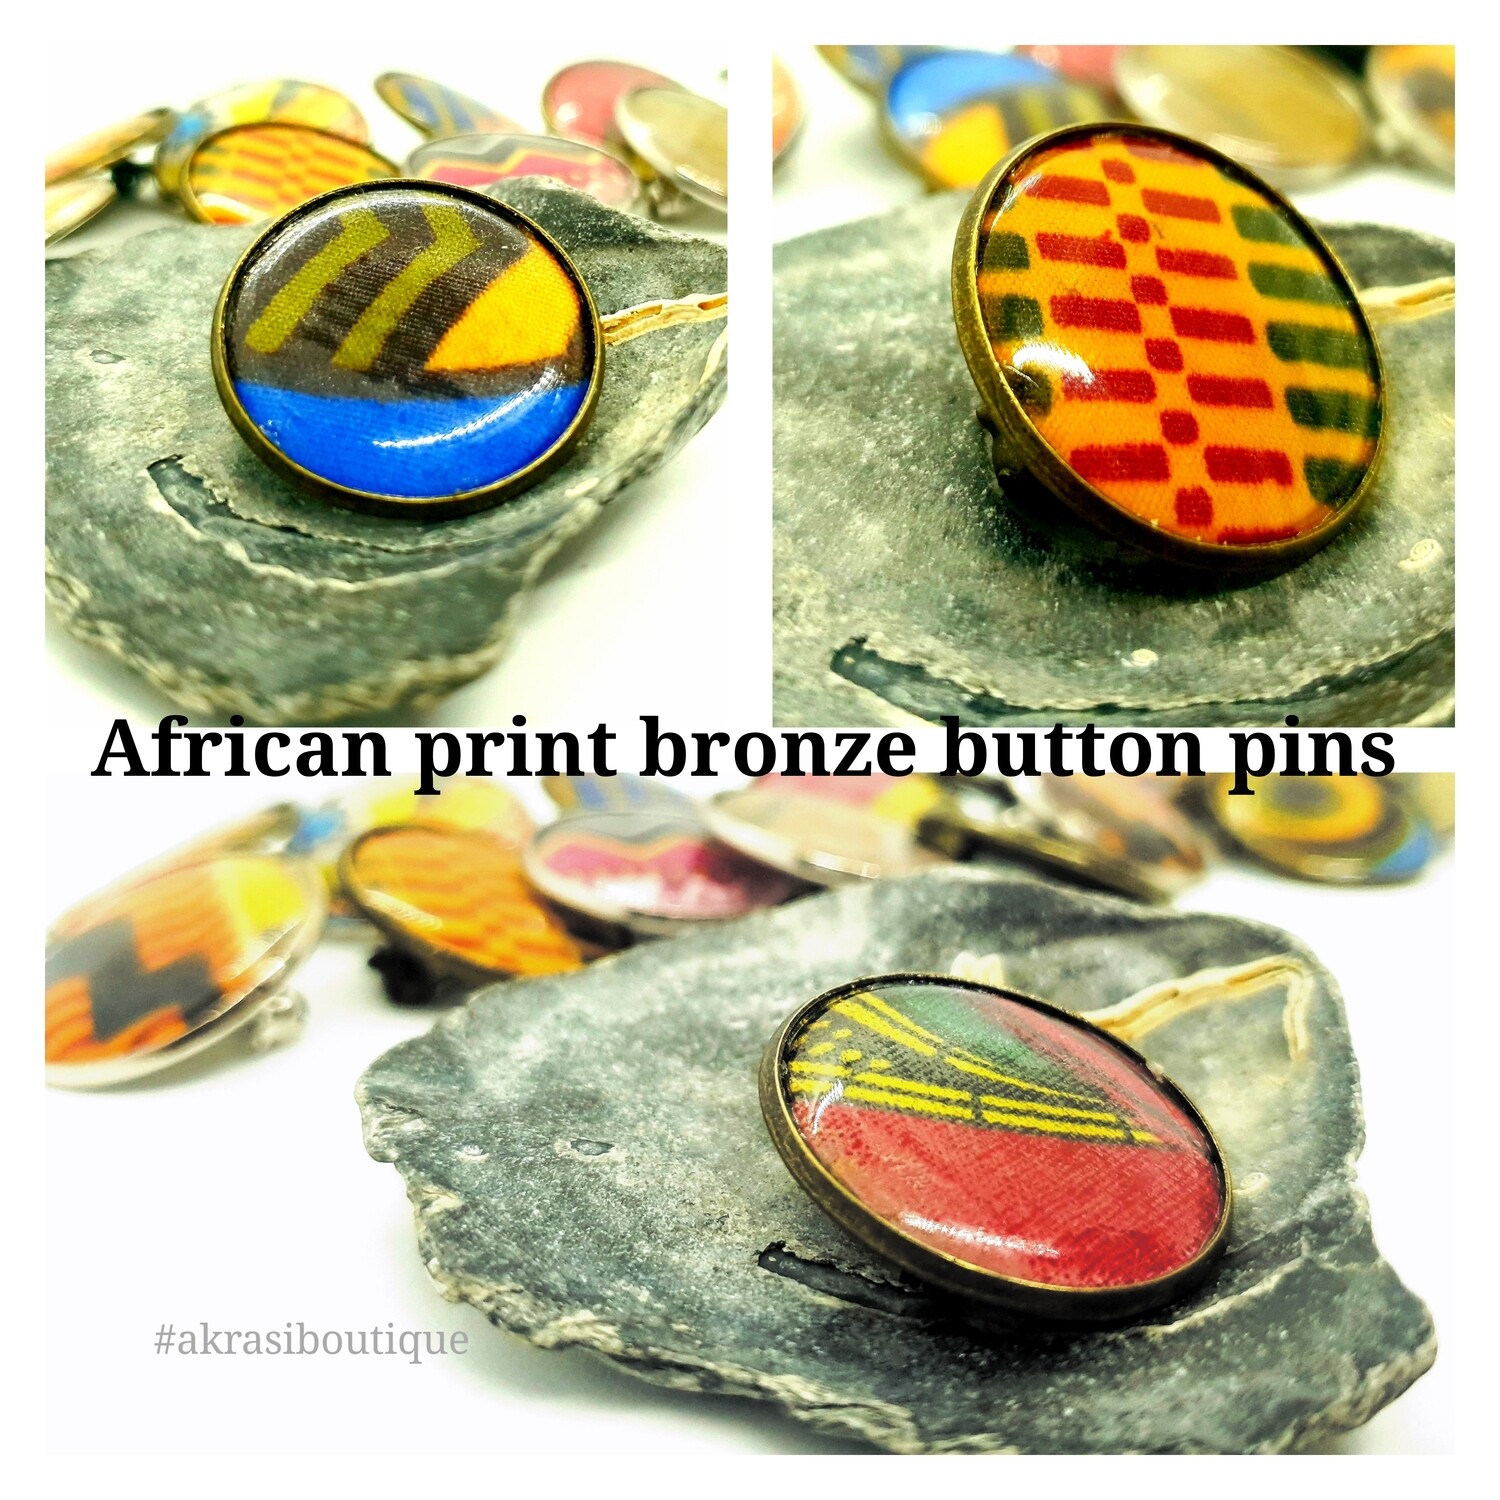 African wax print button pins | Ankara button pin | Kente pin | Dashiki badge